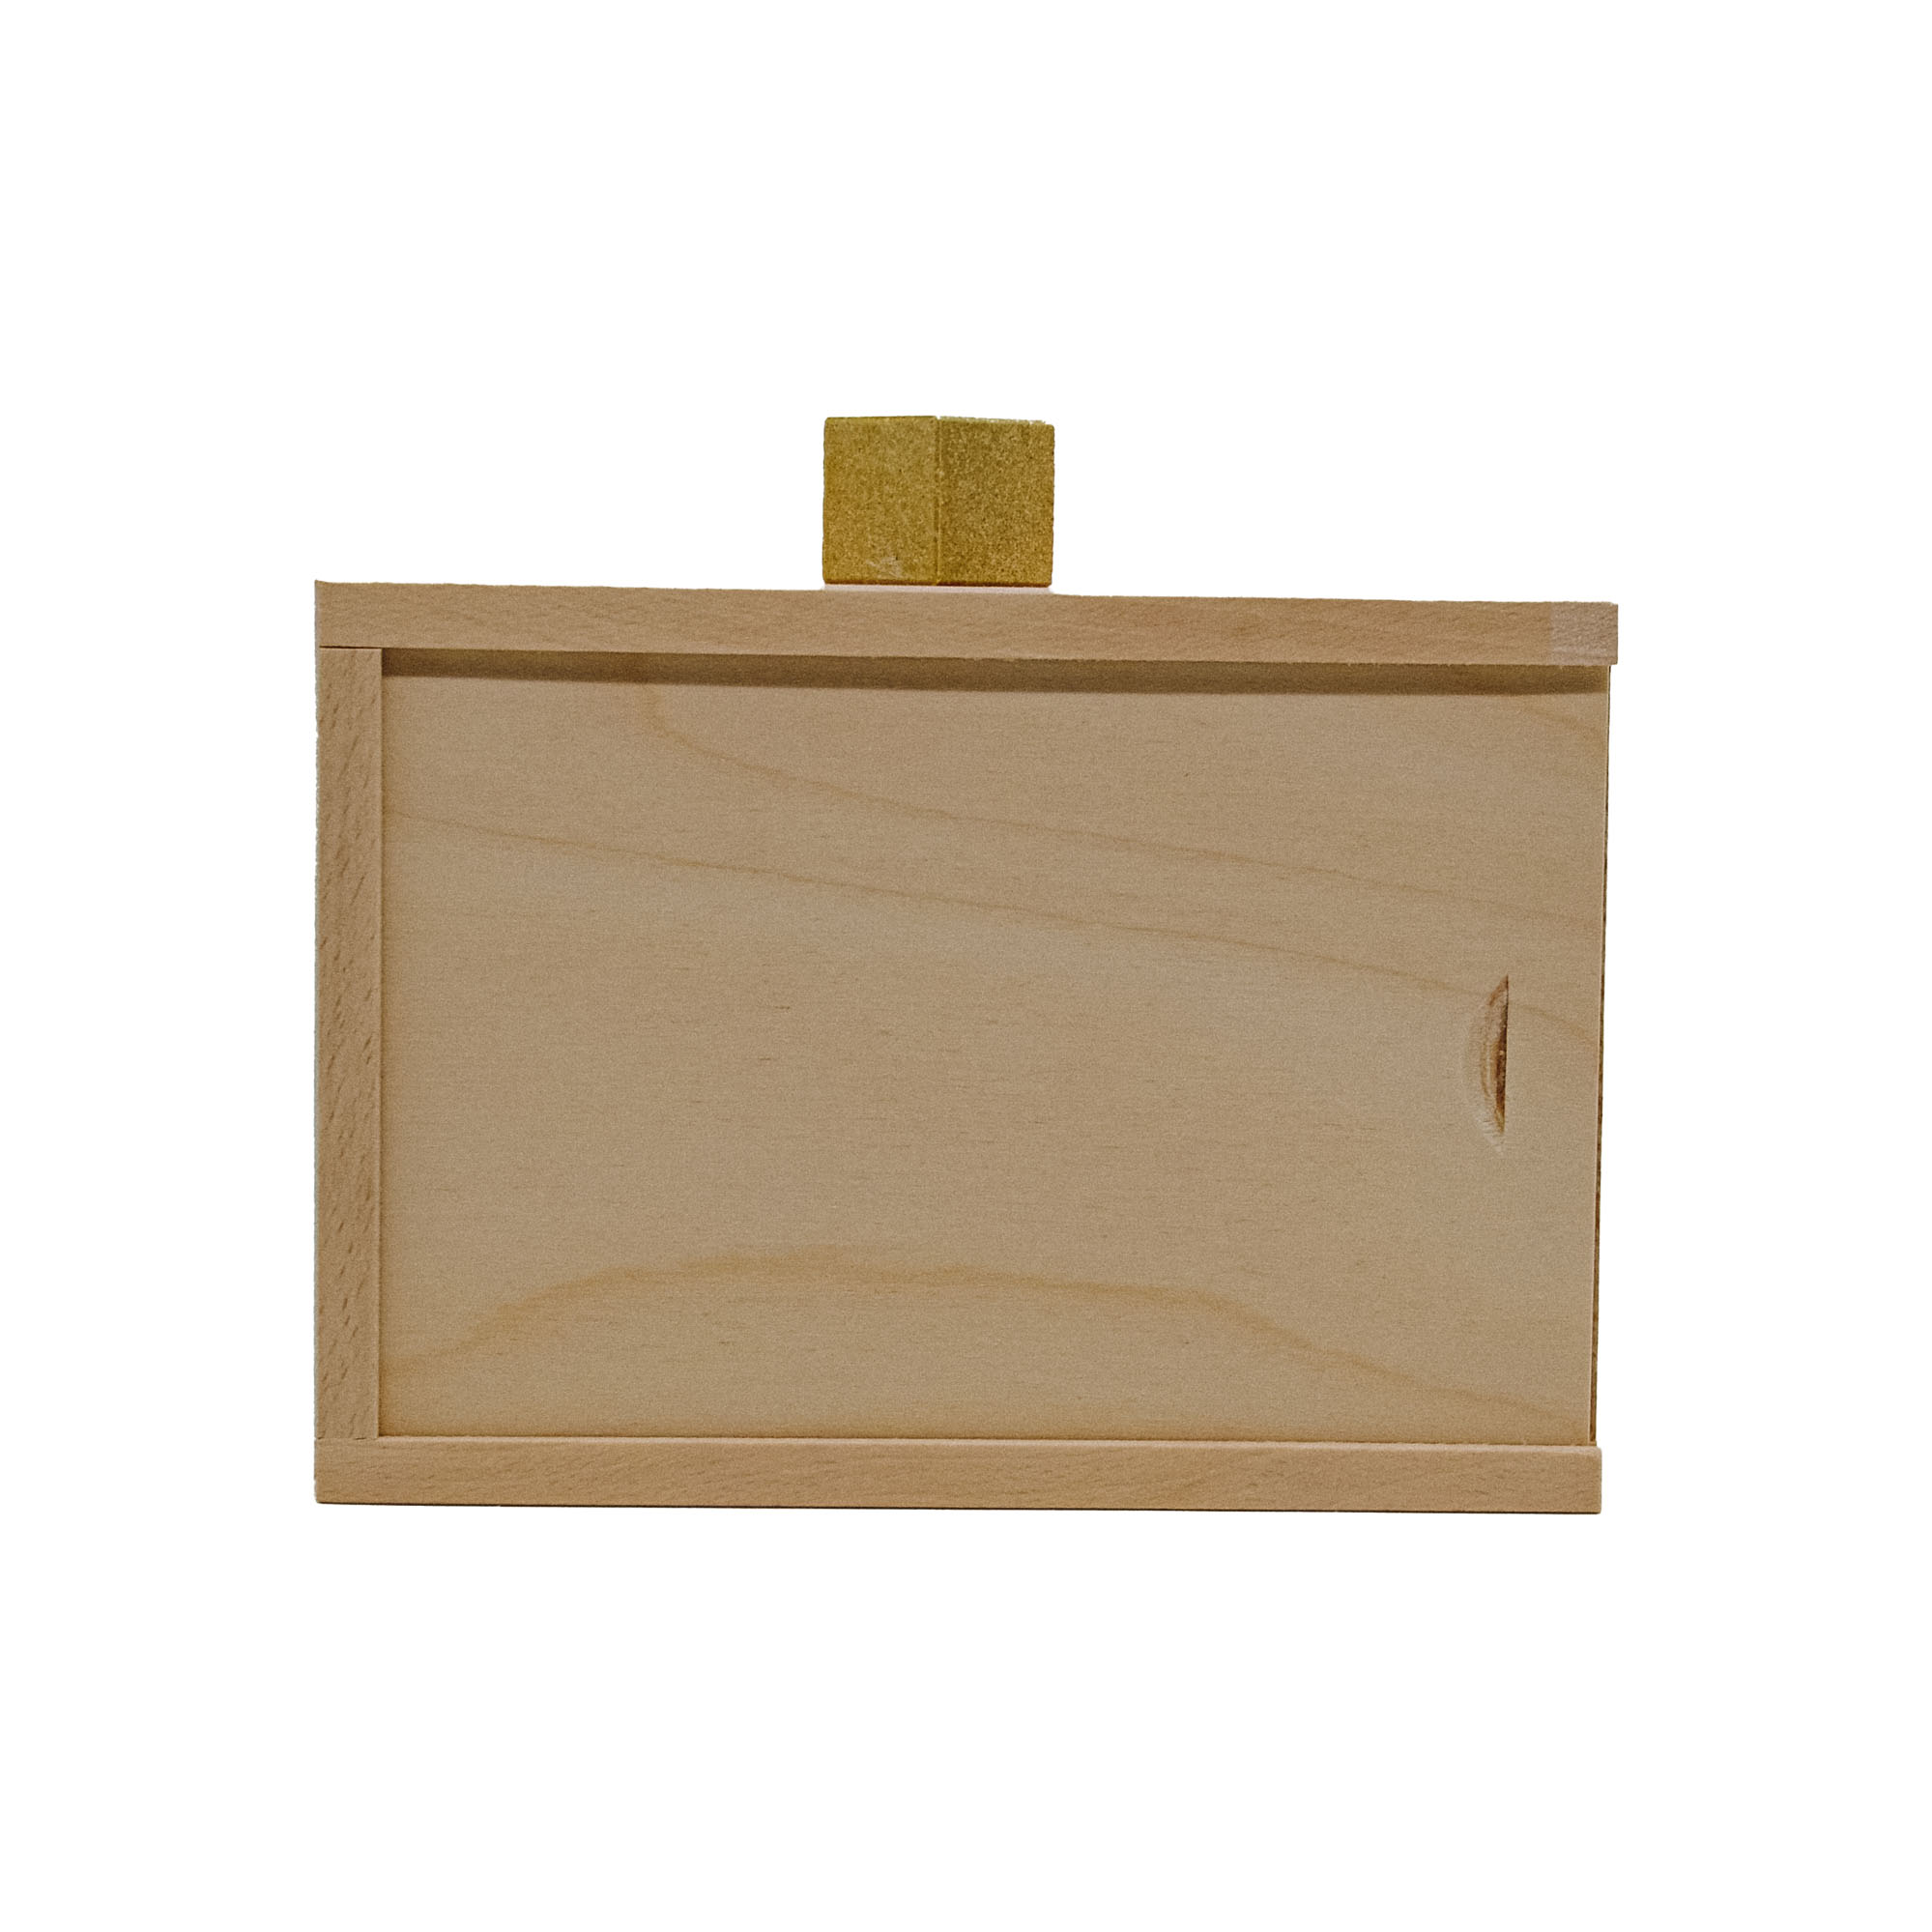 Anker Holzkasten Nr. 2 (19 x 13,4 x 4,5 cm) neutral